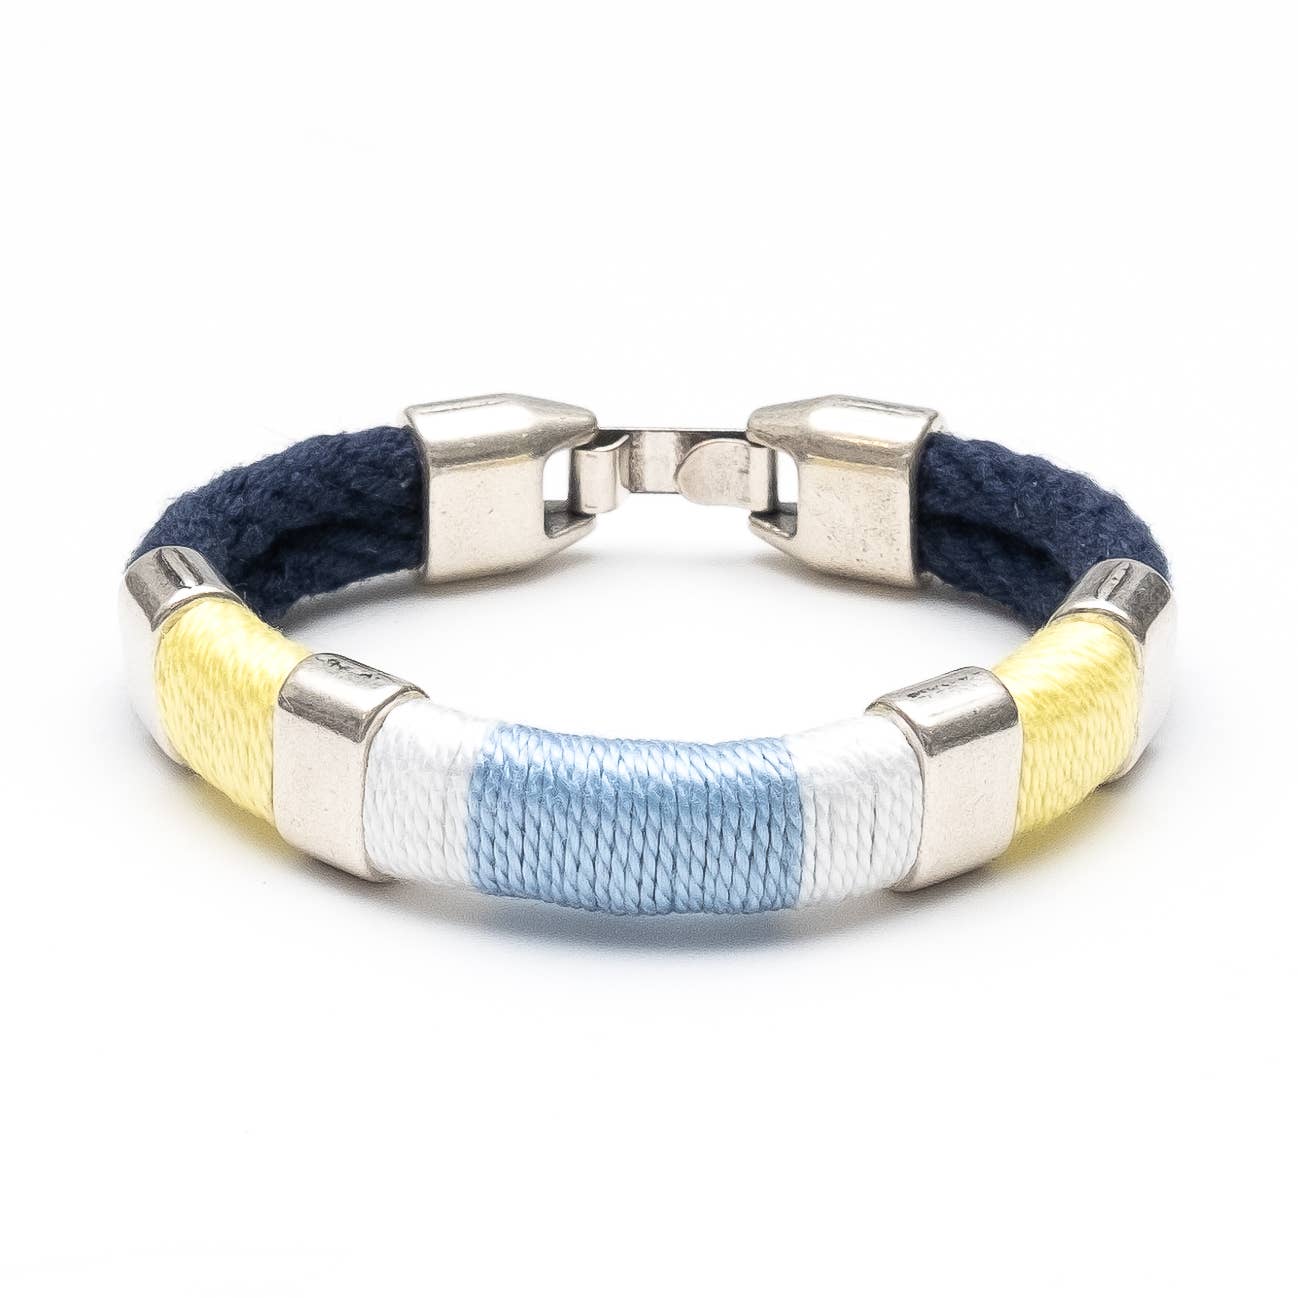 Newbury Bracelet - Navy/Yellow/White/Blue/Silver